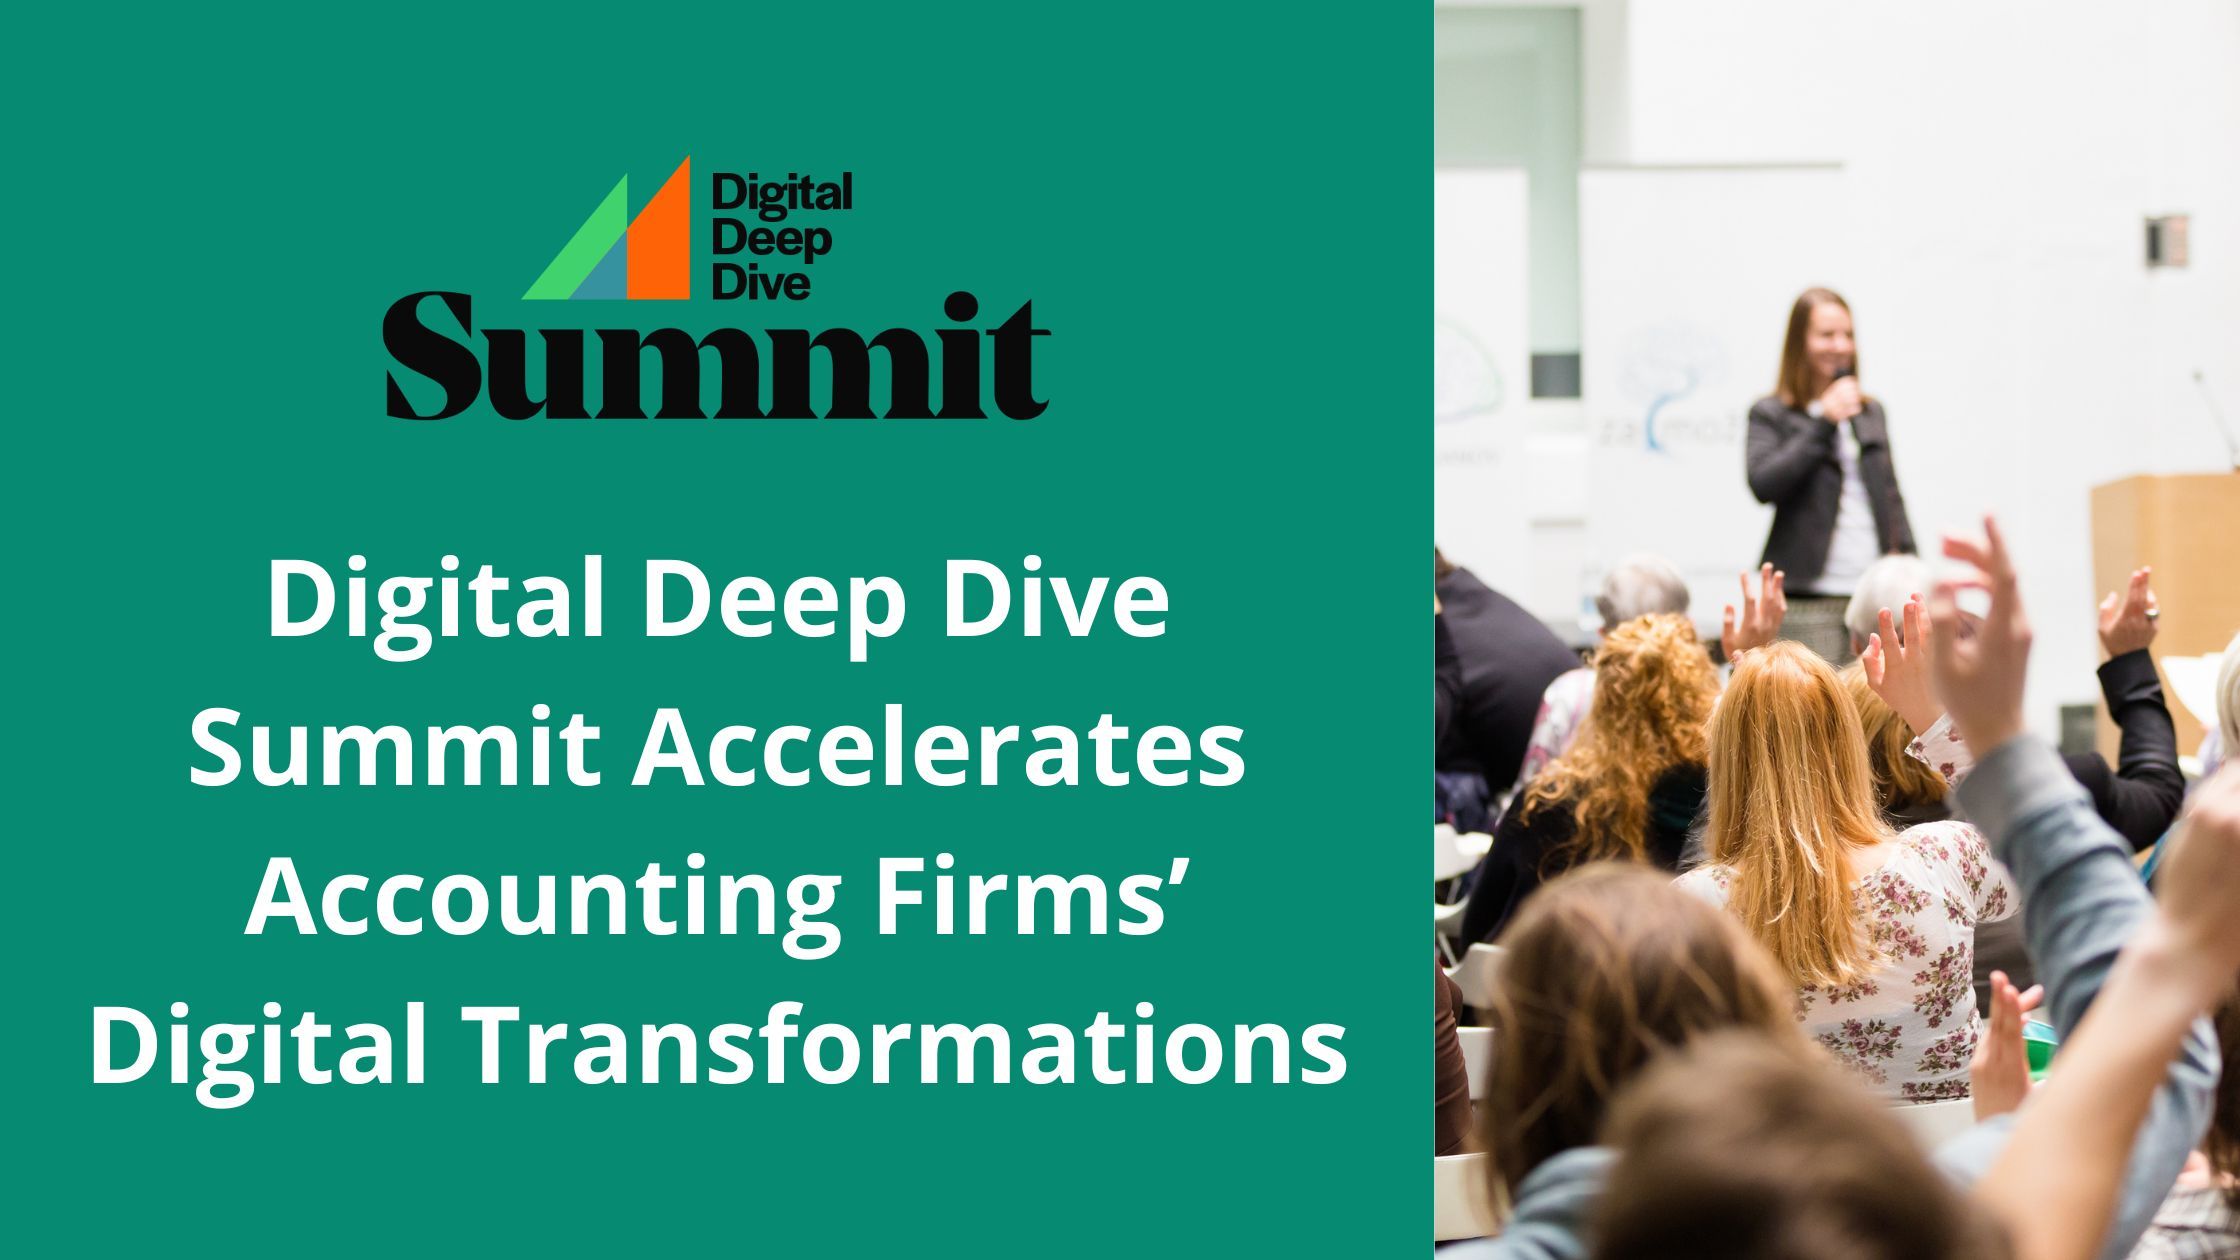 Digital Deep Dive Summit helps Accounting Firms’ Digital Transformations